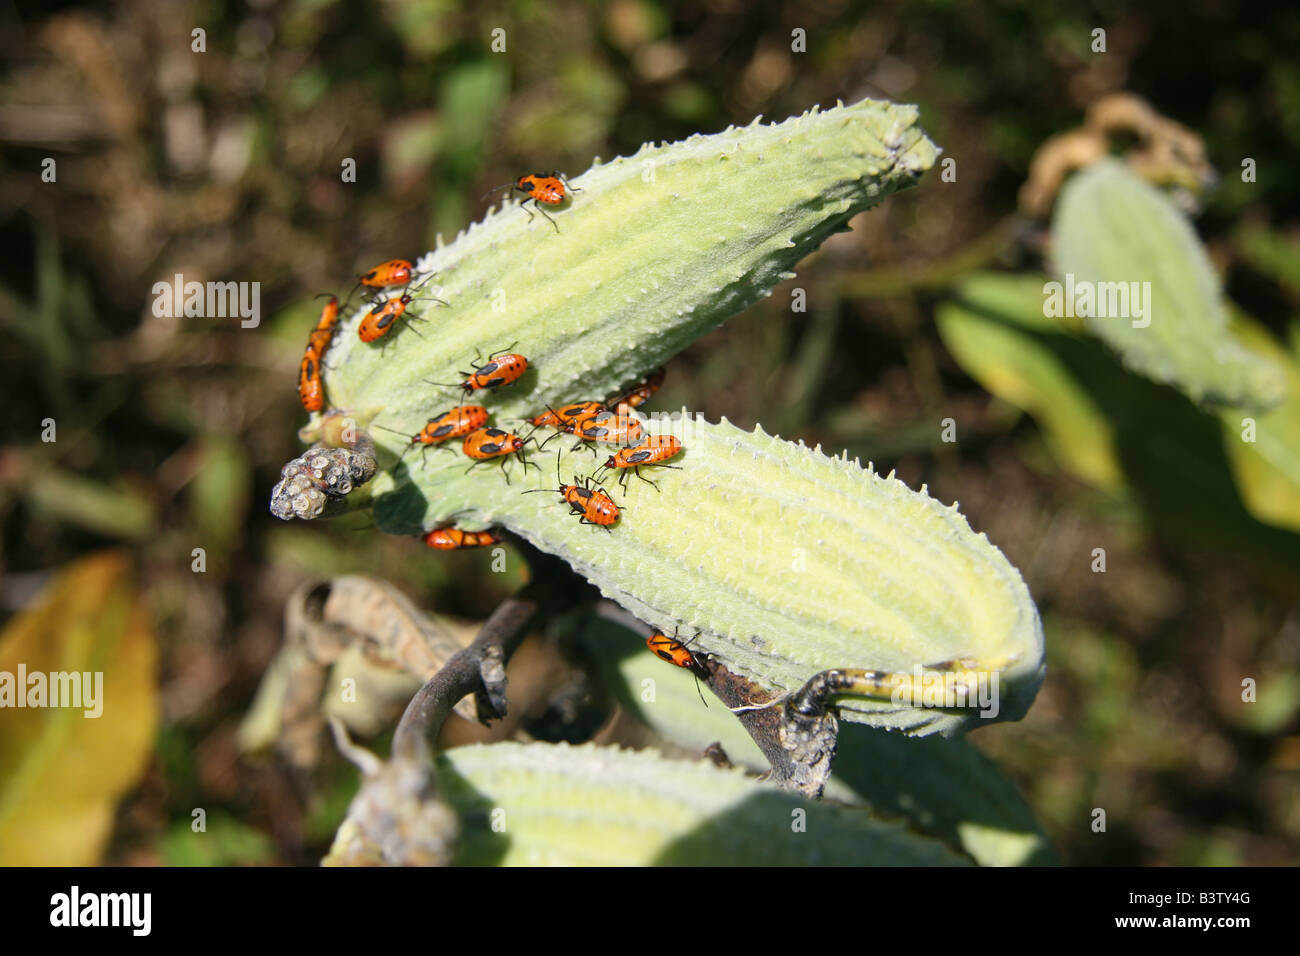 Nymph of Large Milkweed Bug (Oncopeltus fasciatus) on milkweed (Asclepias) seed pods. Stock Photo